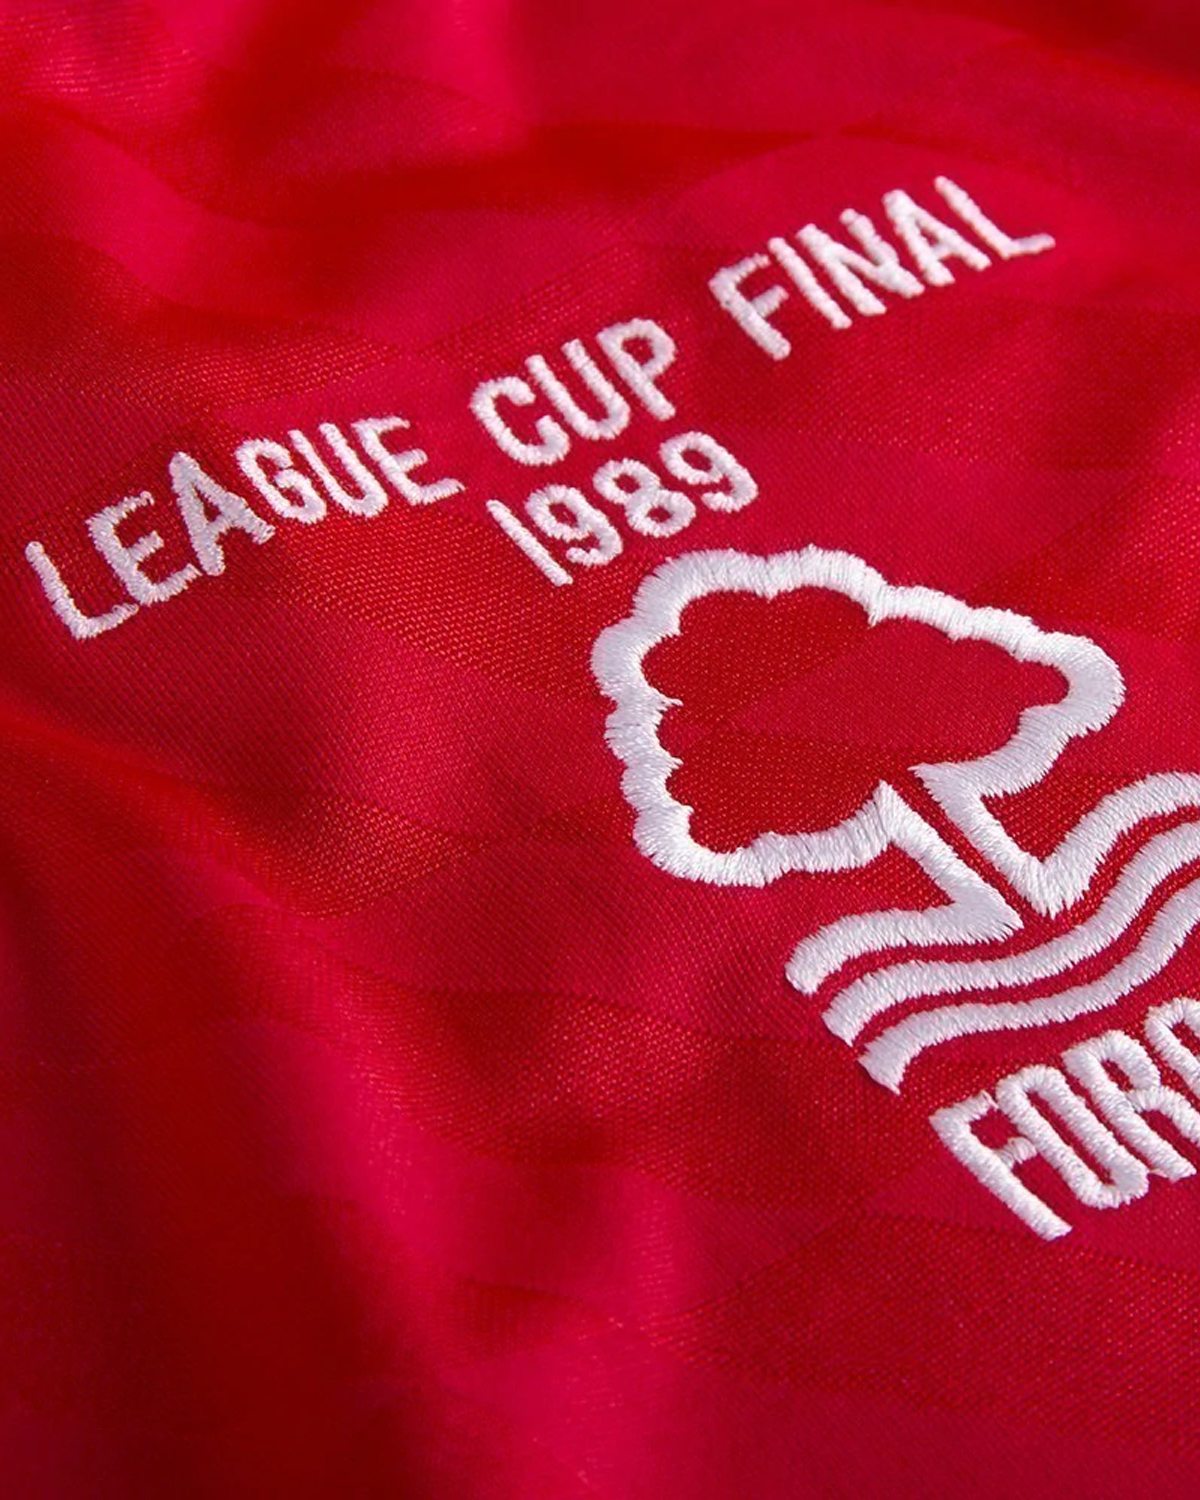 NFFC Mens Retro 1989 Home Shirt - Nottingham Forest FC